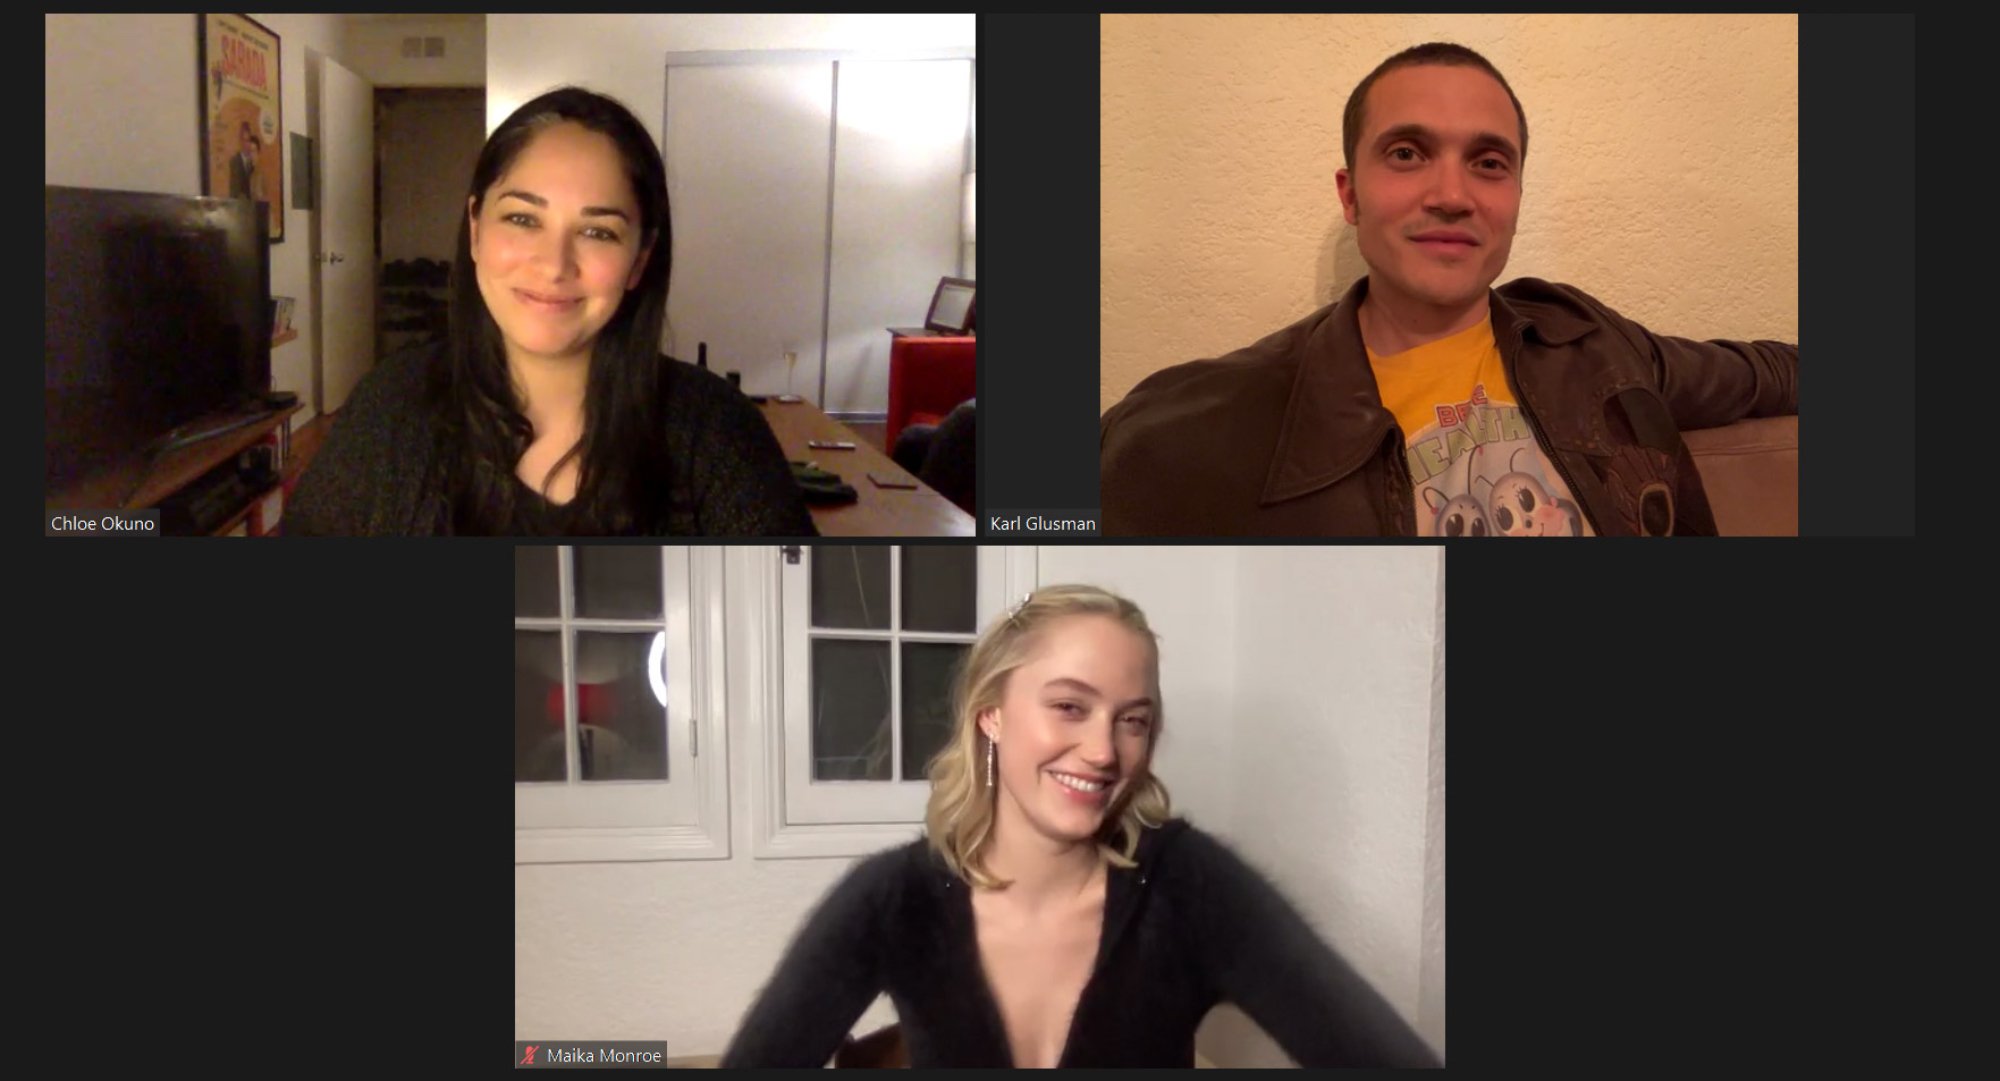 'Watcher' Chloe Okuno, Maika Monroe, and Karl Glusman smiling on video chat during a Q&A